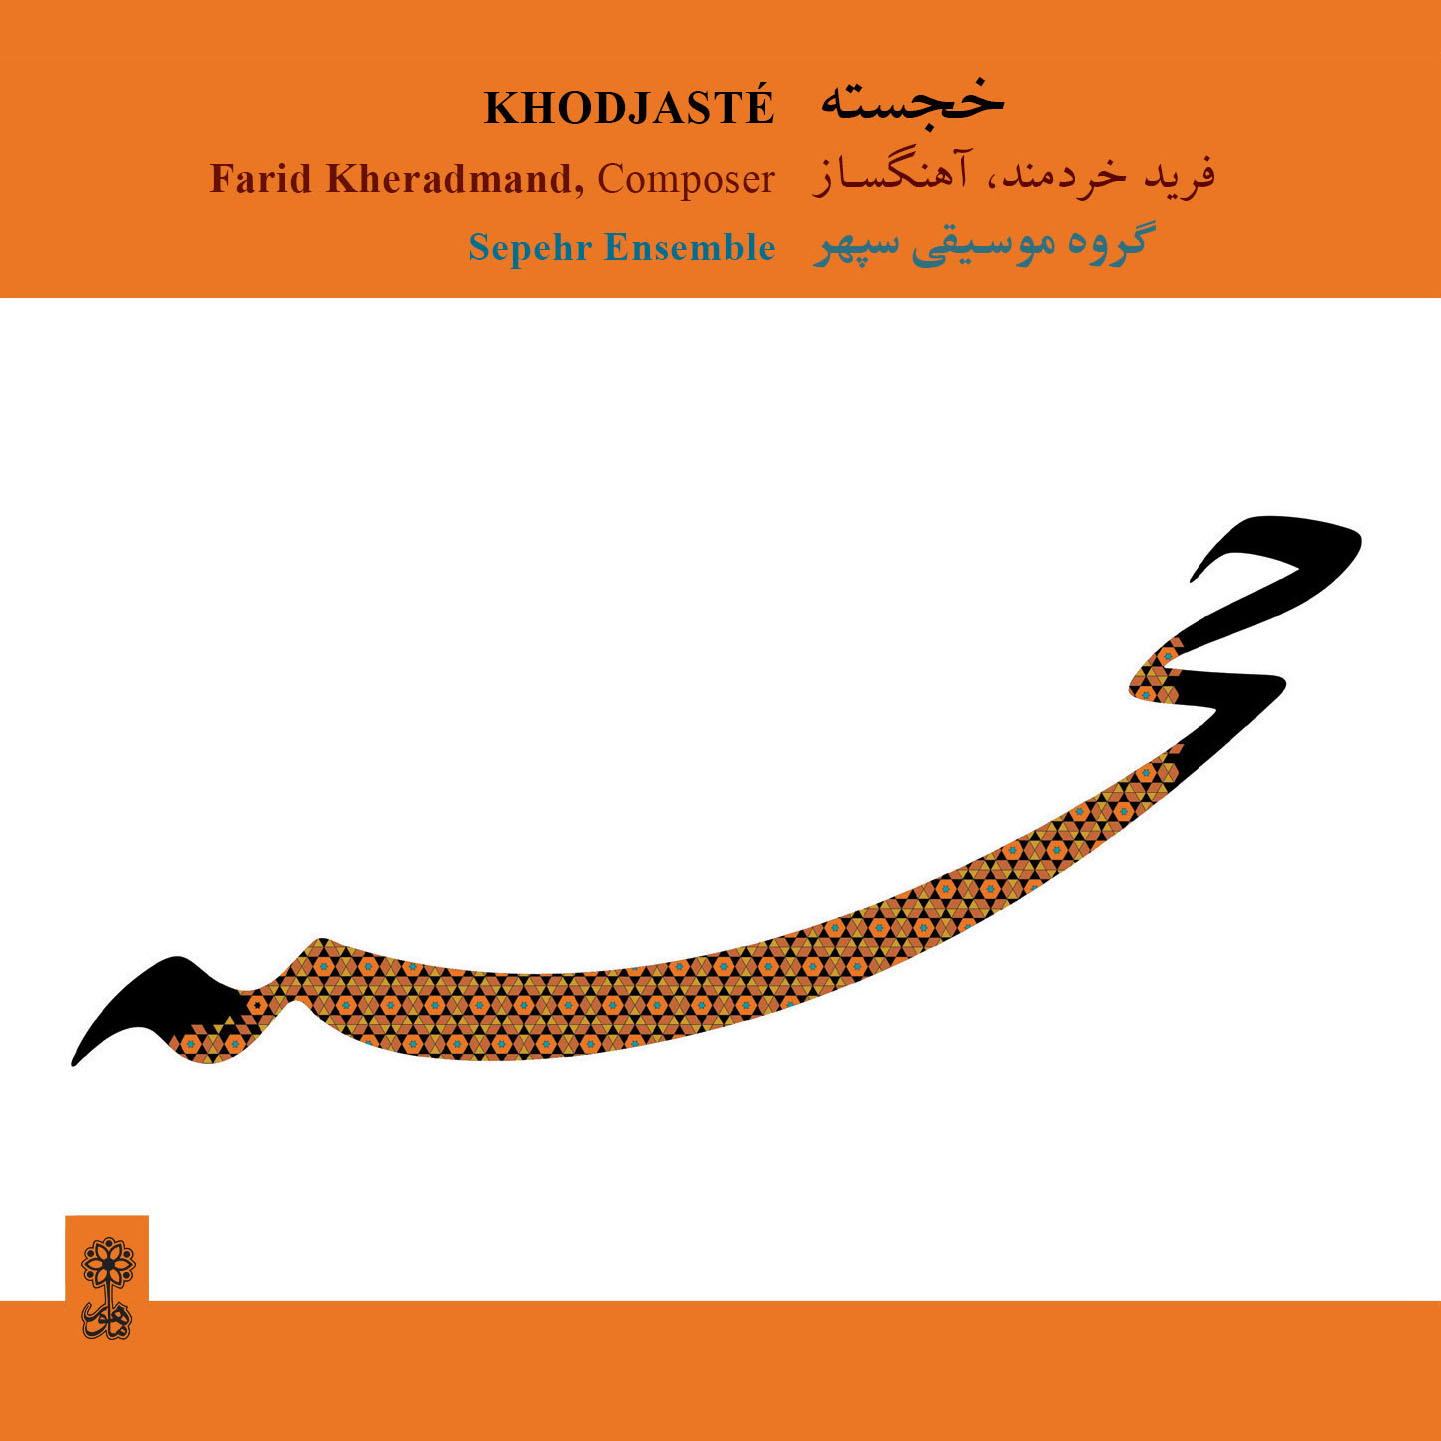 Khodjasteh by Farid Kheradmand